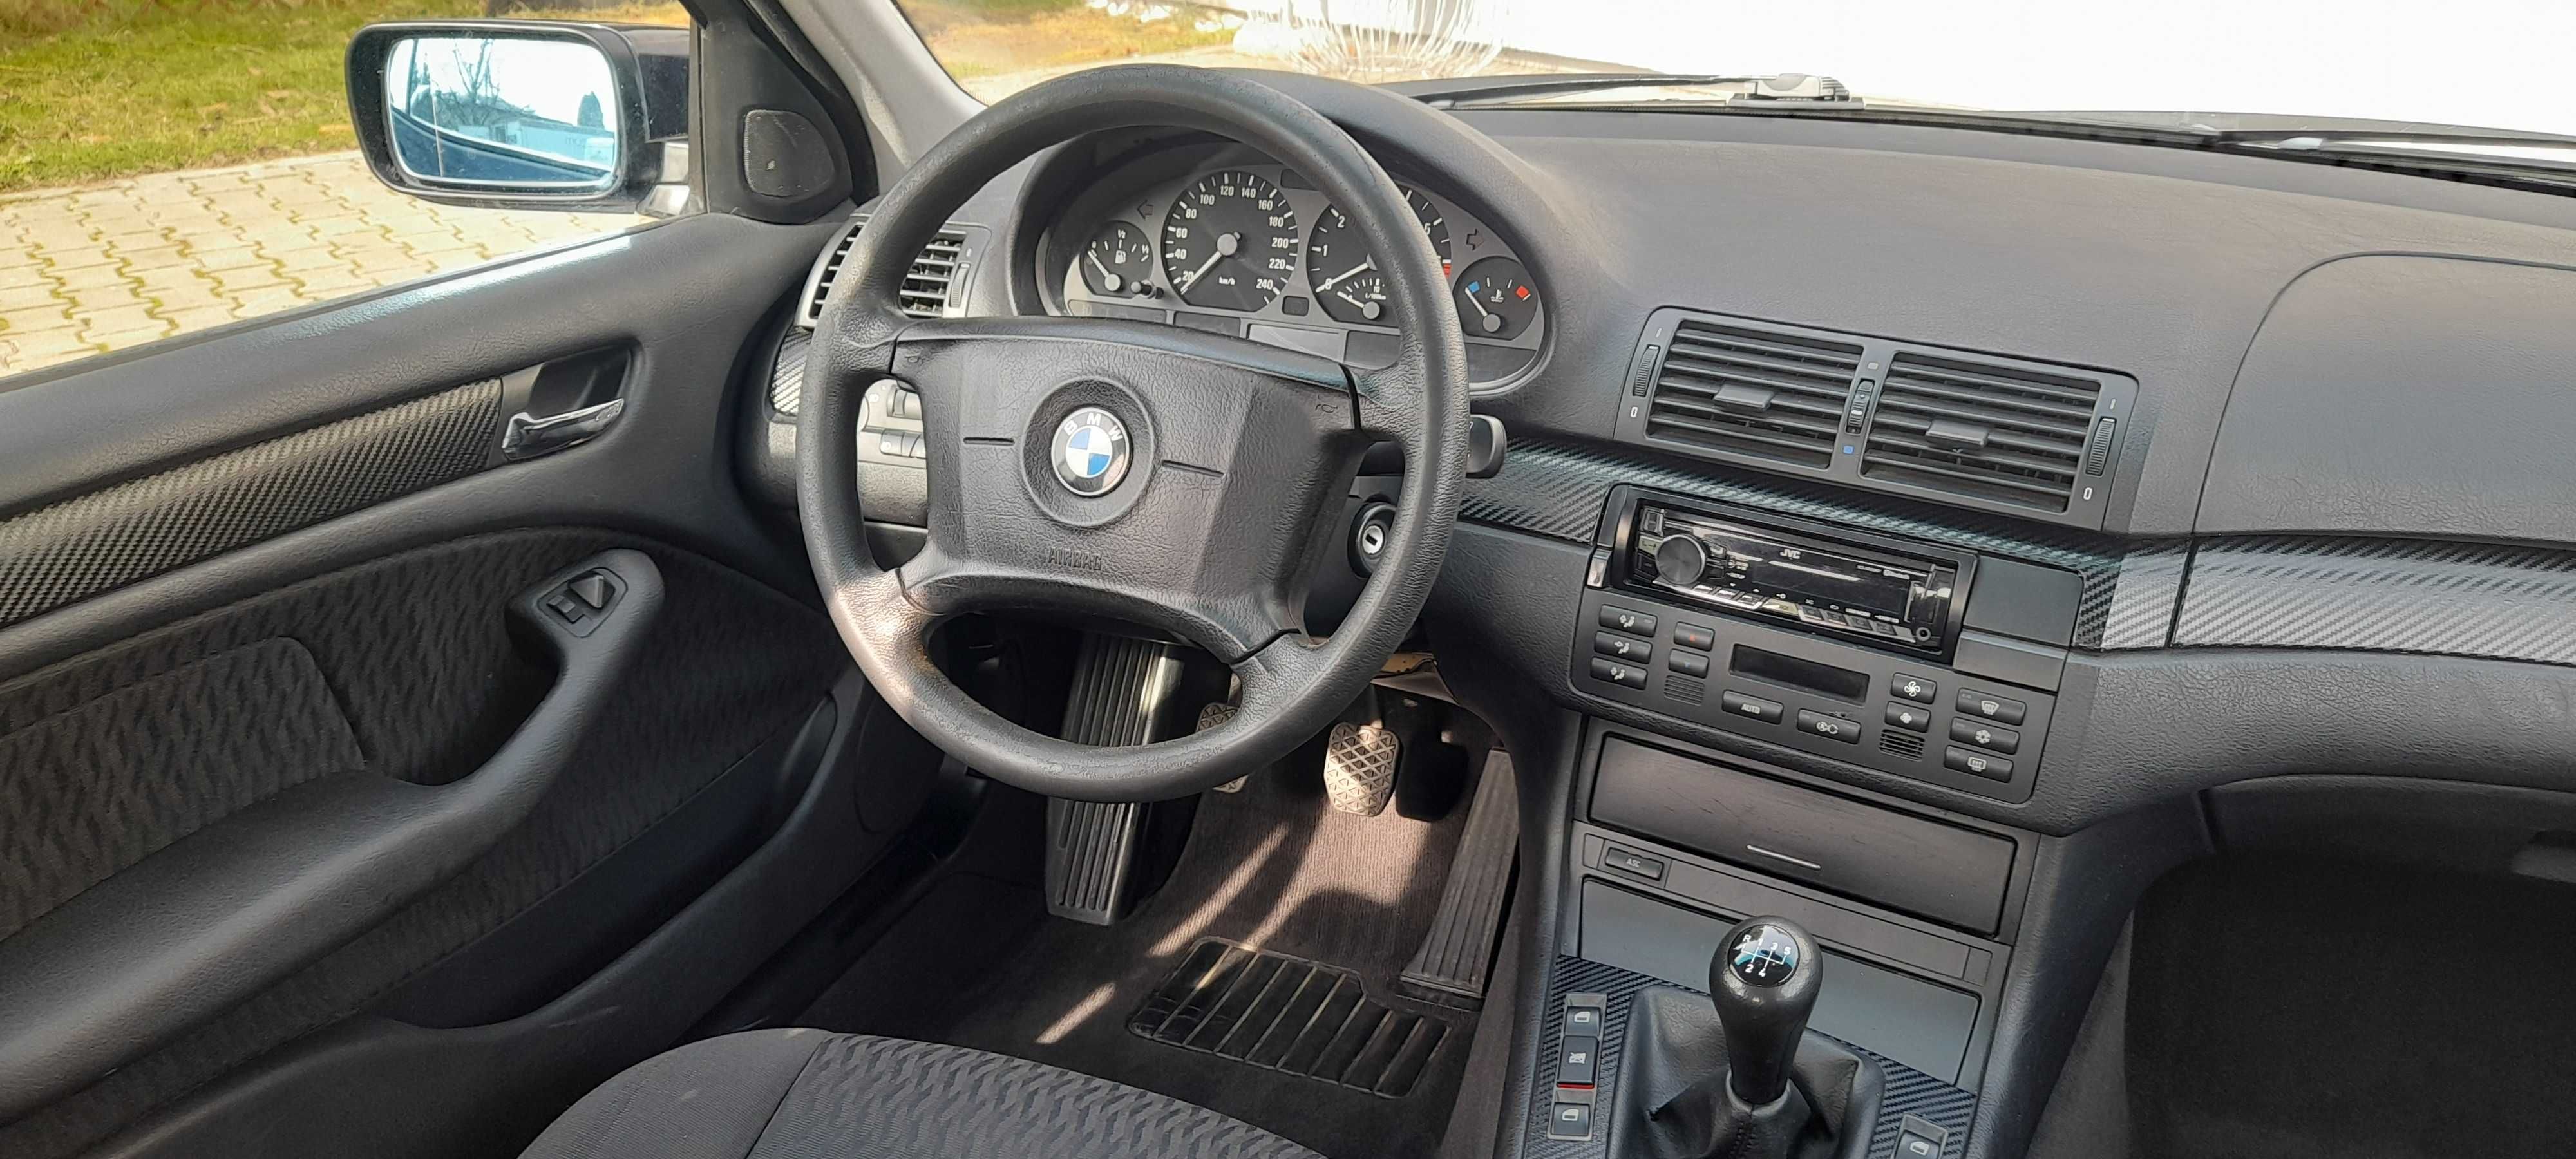 BMW E46 318i | OZ Futura 3tlg | wydech reuter motorsport | gwint